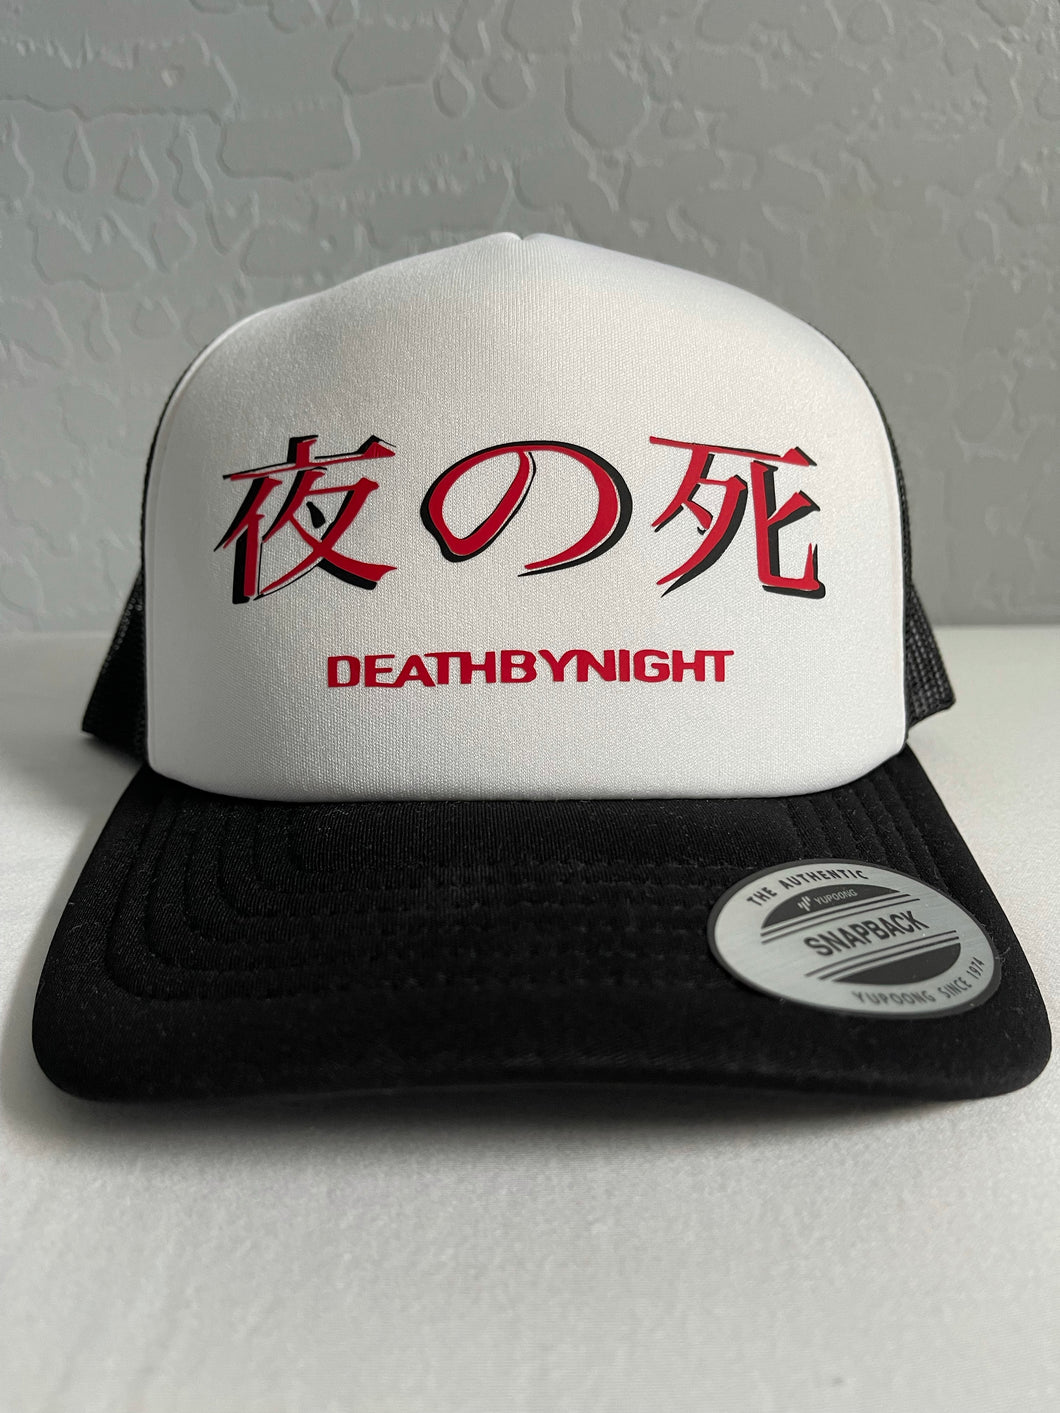 Death By Night Trucker Hat